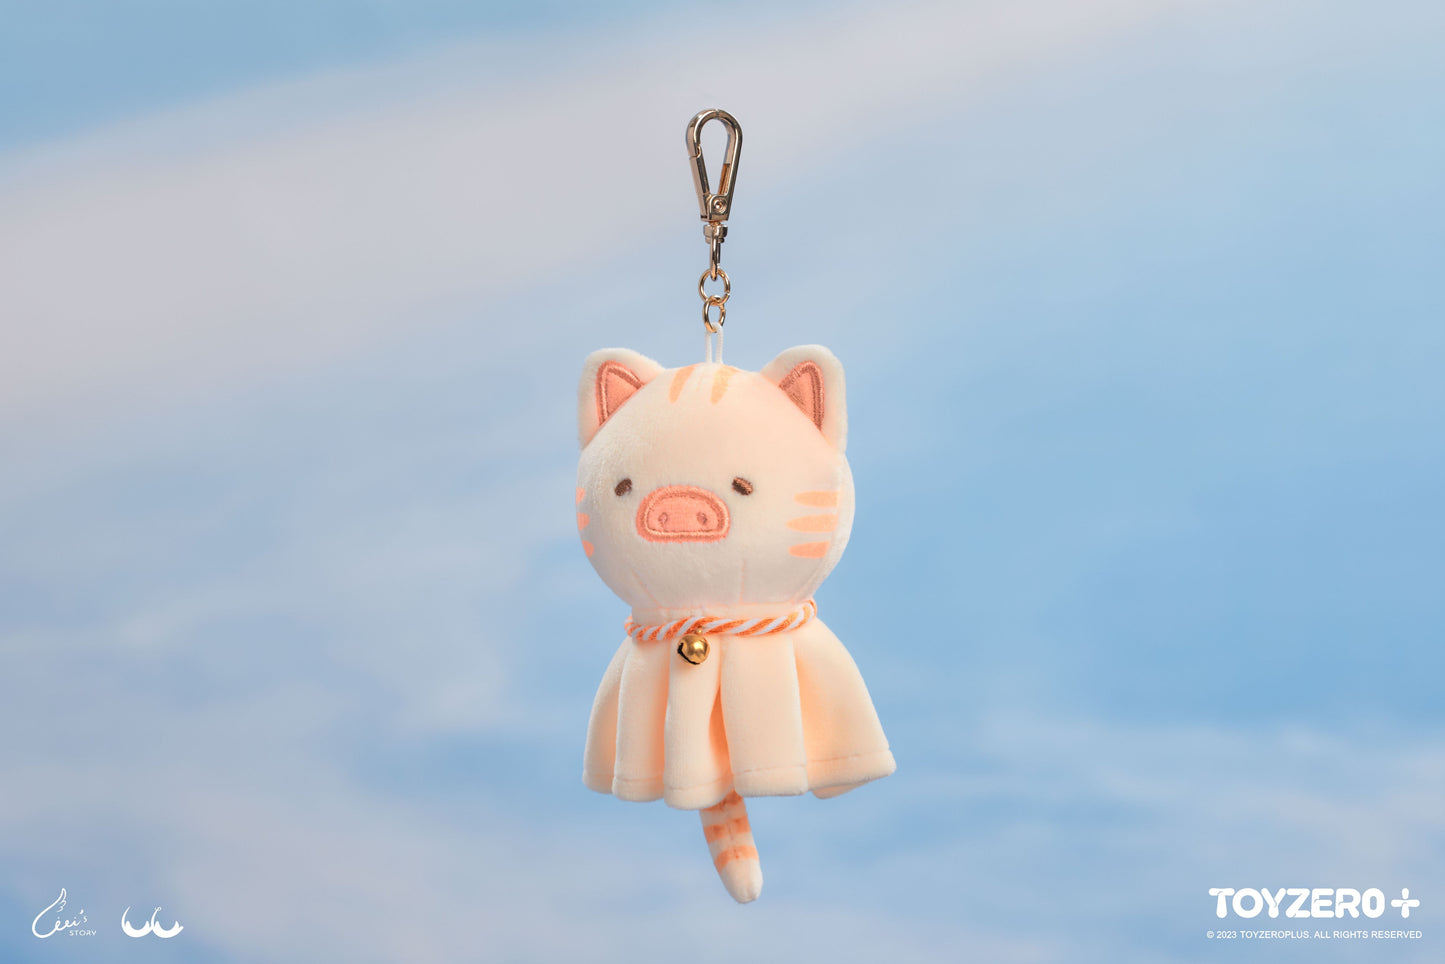 LuLu the Piggy Find Your Way - Kitty Teru Teru Bozu Plush Magnet 罐頭豬LuLu 旅行系列 -毛絨掛件(豬咪晴天娃娃)